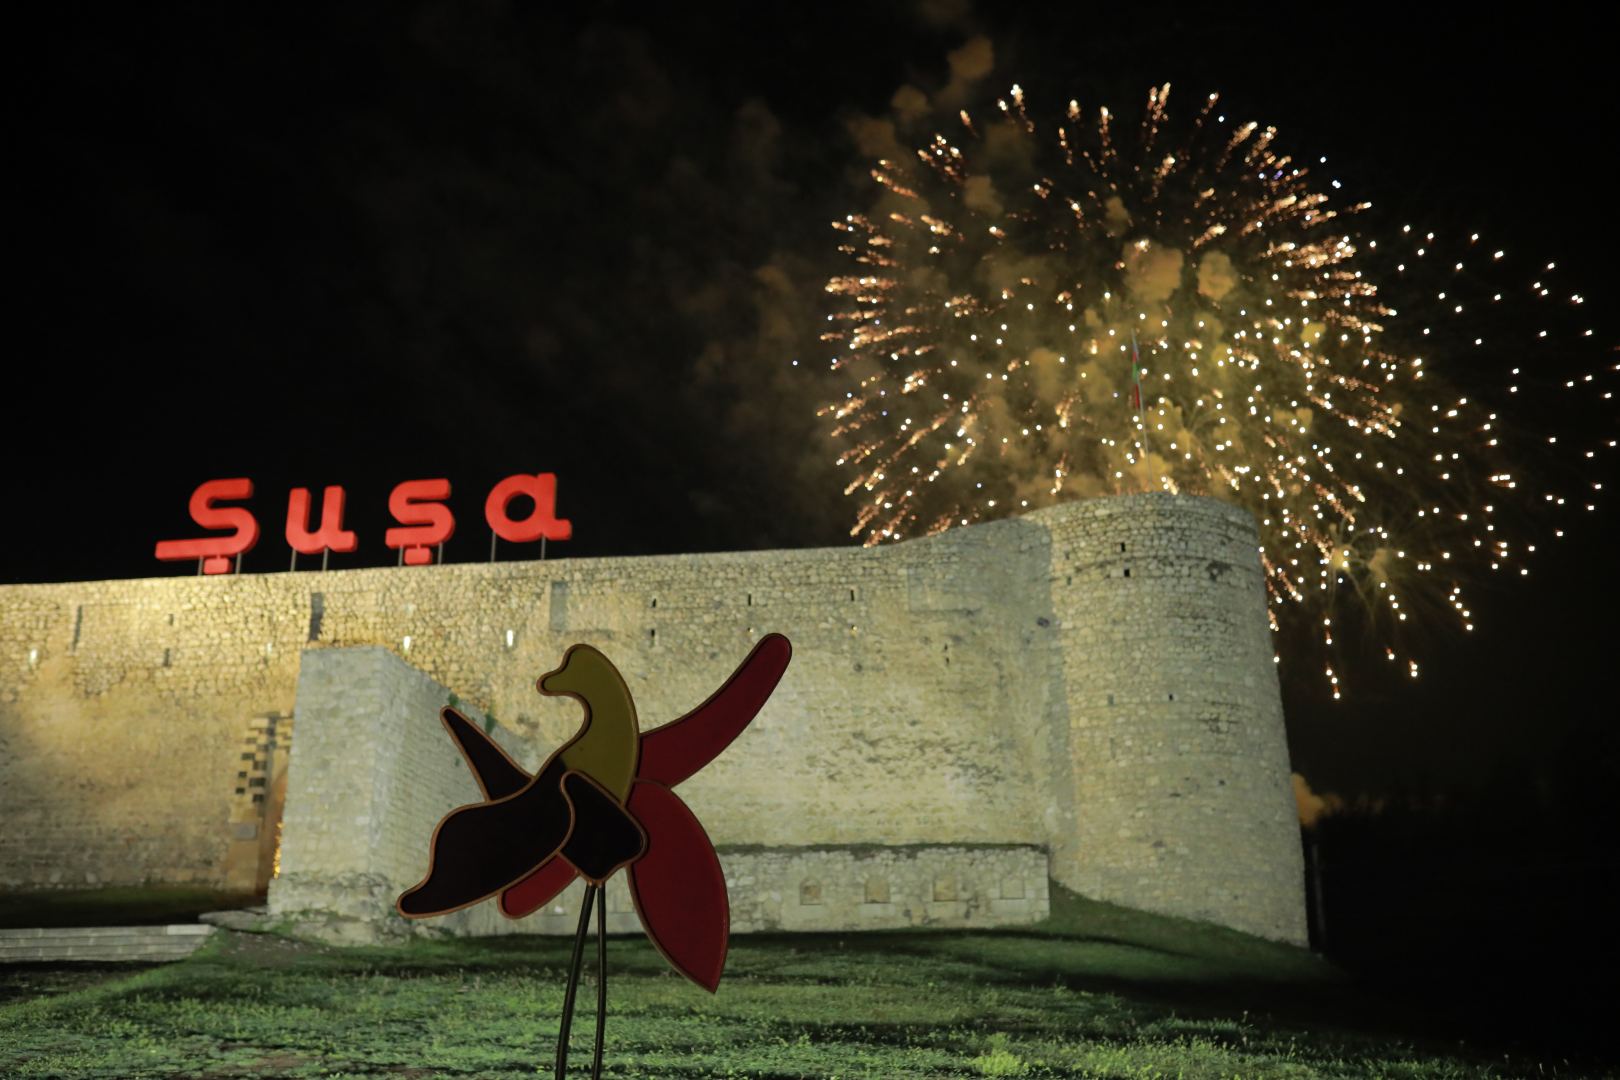 Azerbaijan’s Shusha celebrates 100th anniversary of Heydar Aliyev with fireworks (PHOTO)